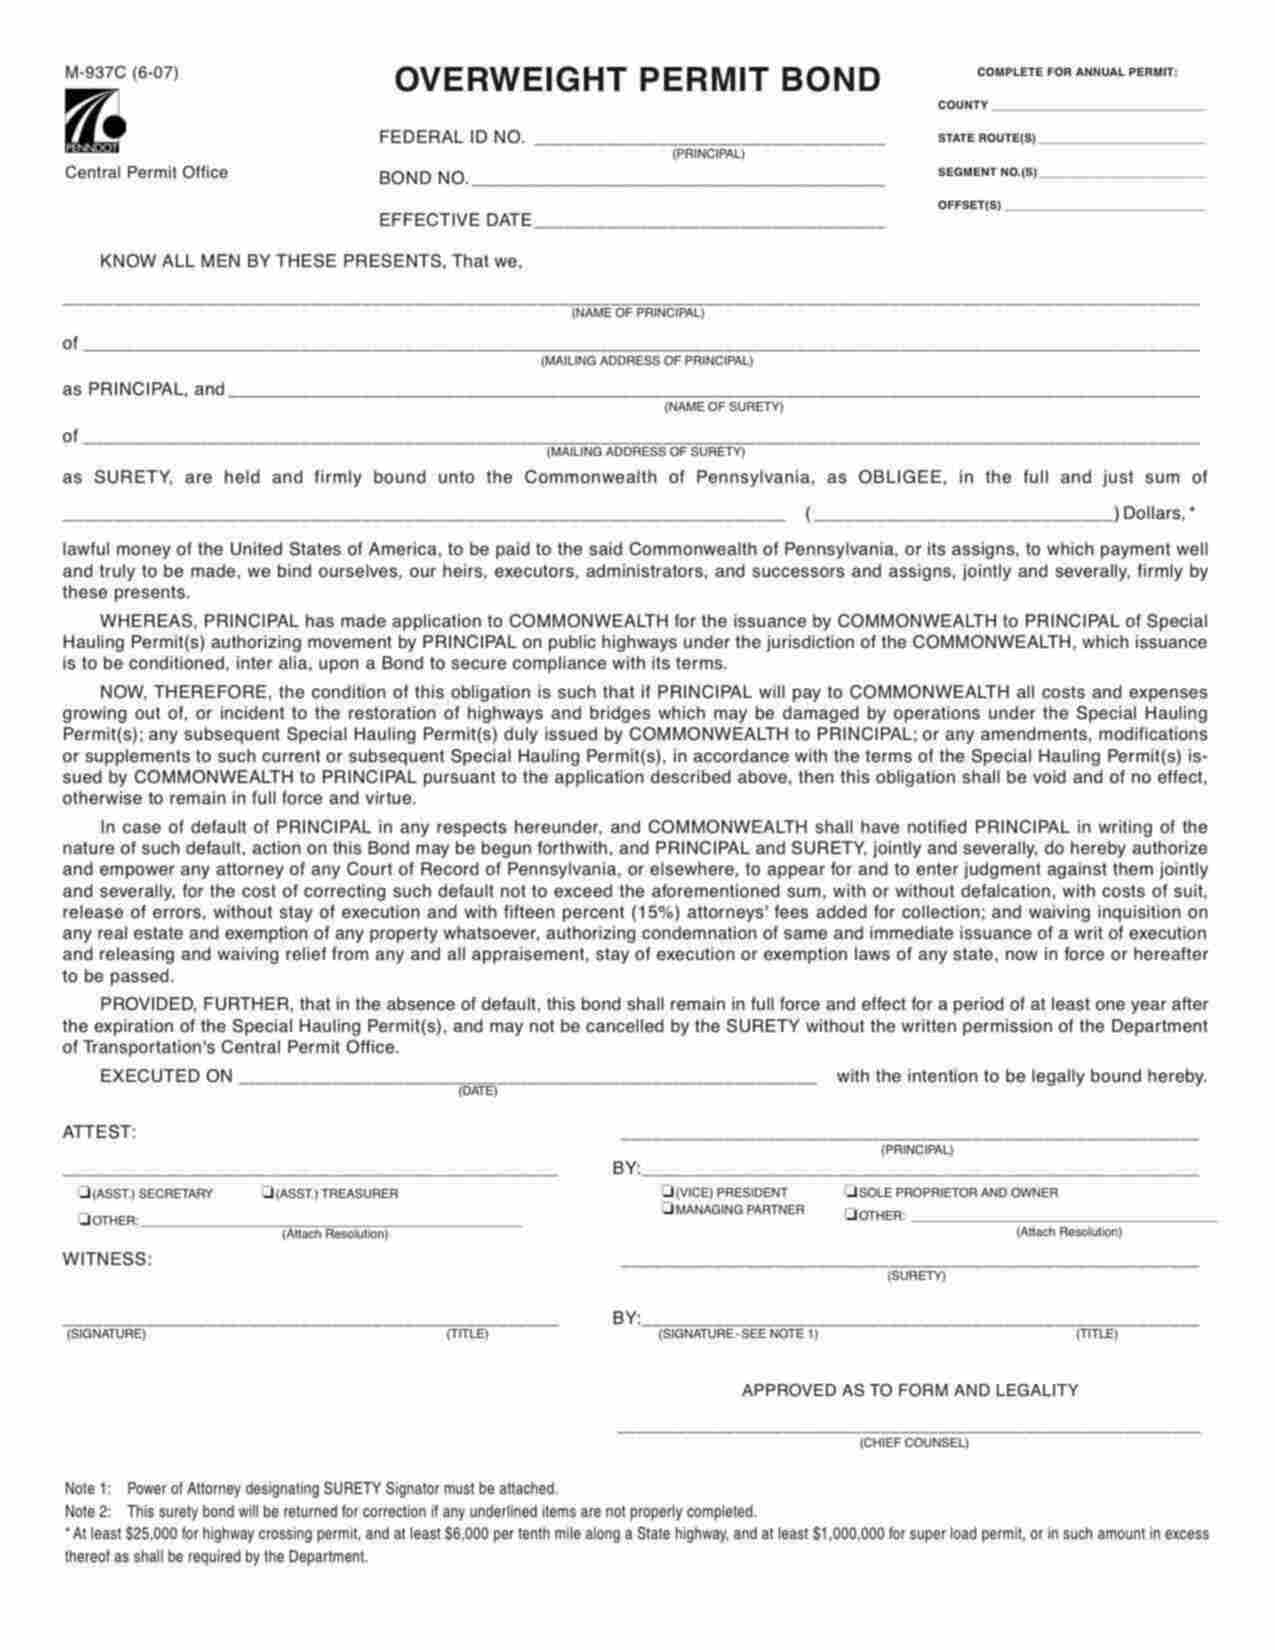 Pennsylvania Overweight Permit (M-937C) Bond Form